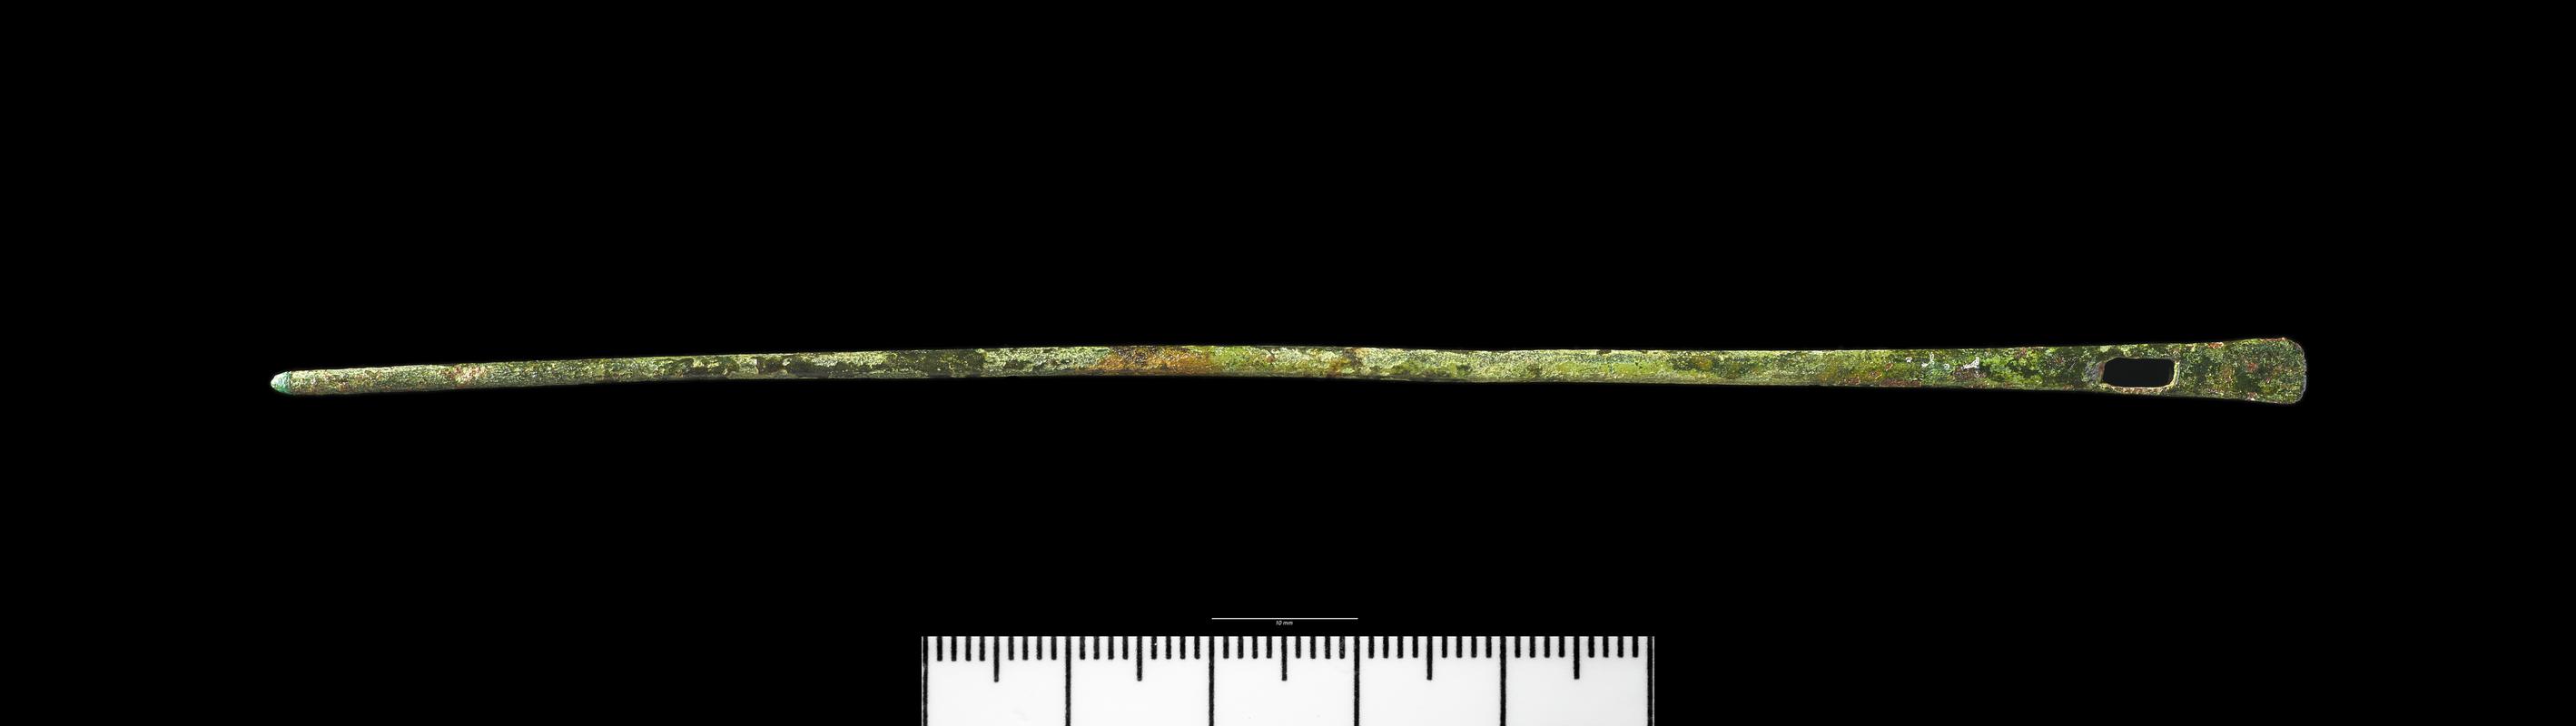 Roman copper alloy needle